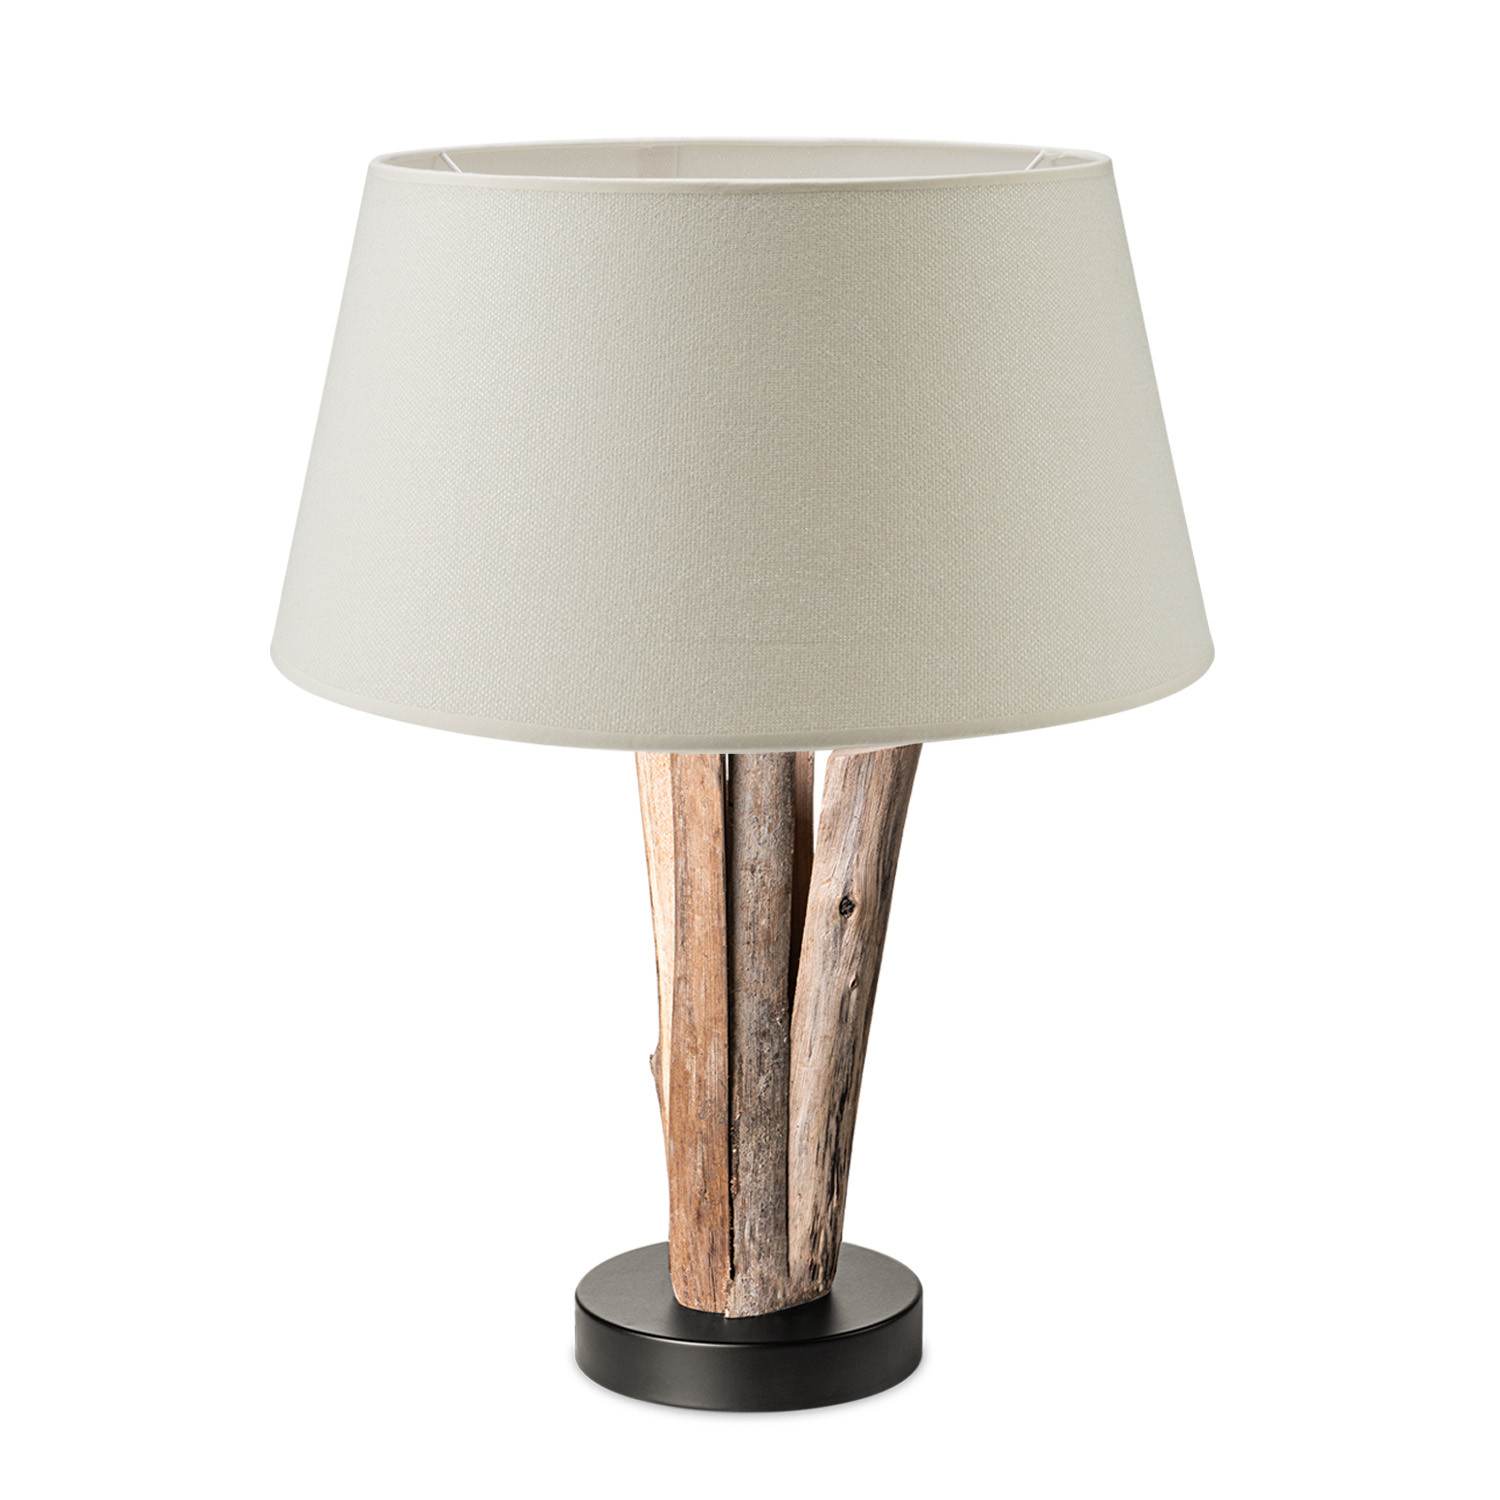 Light depot - tafellamp Bindy houten takken & lampenkap Melrose - warmwit - Outlet